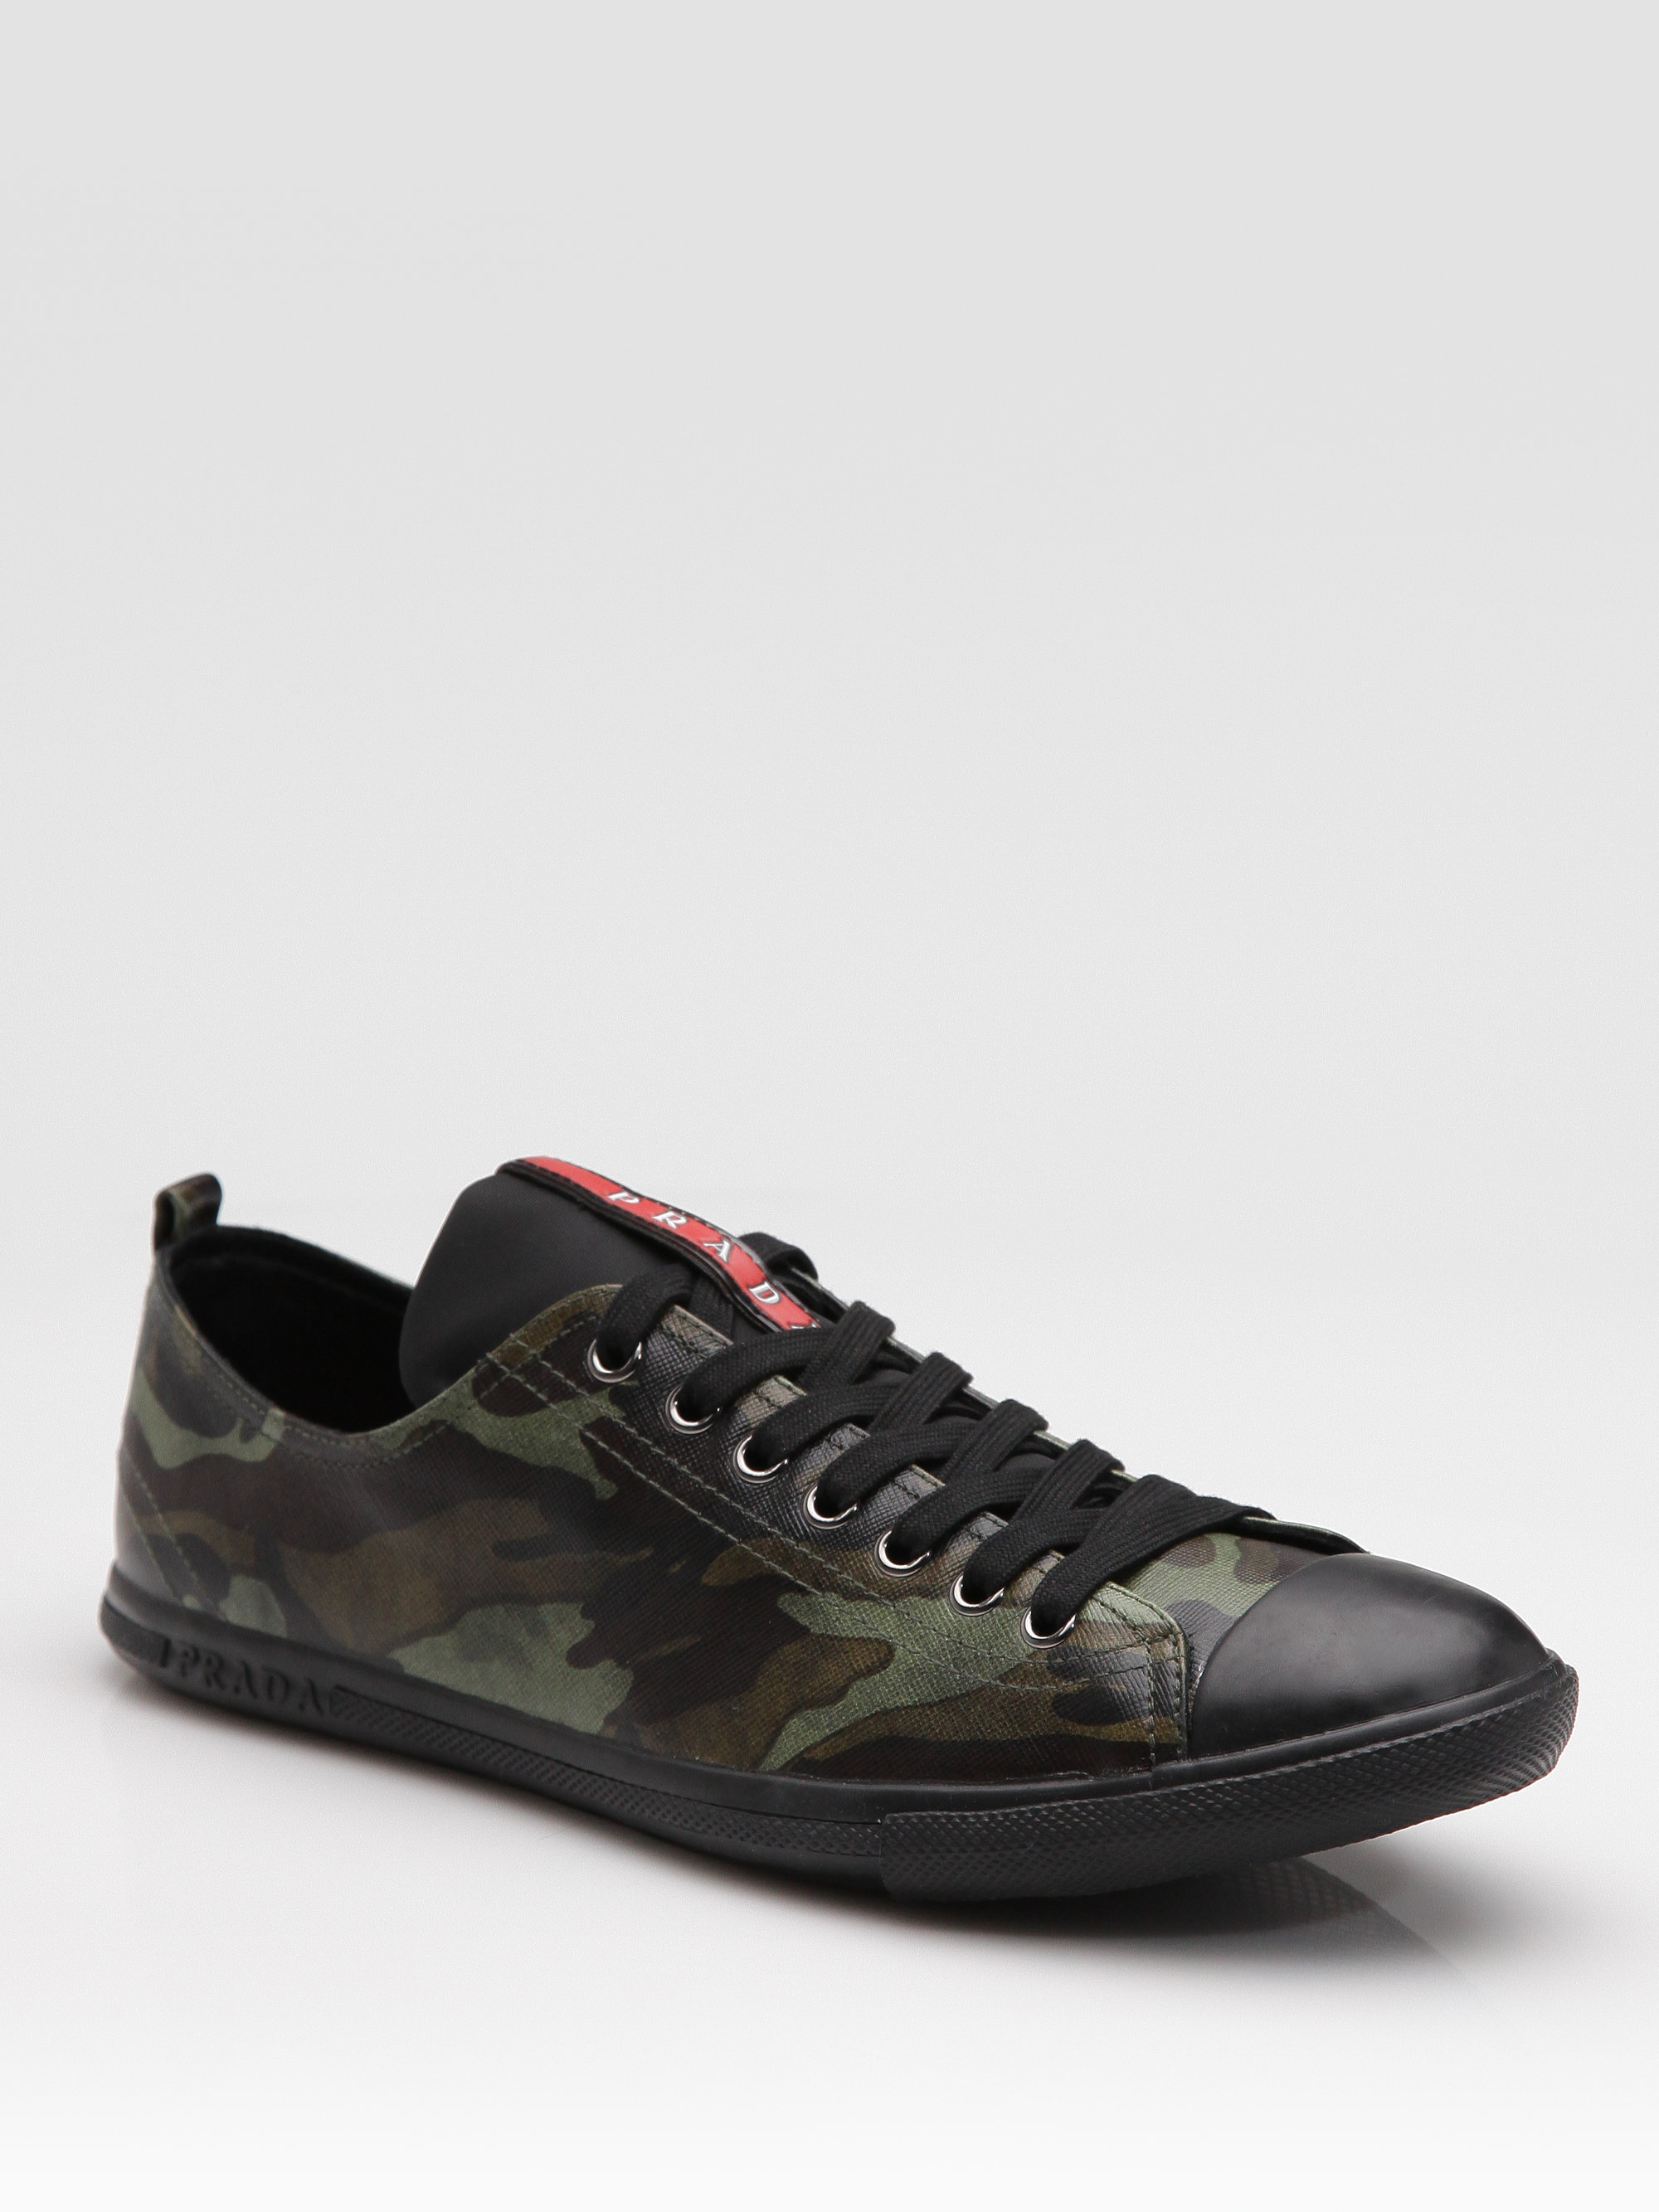 Prada Camouflage Sneakers in Green for Men - Lyst